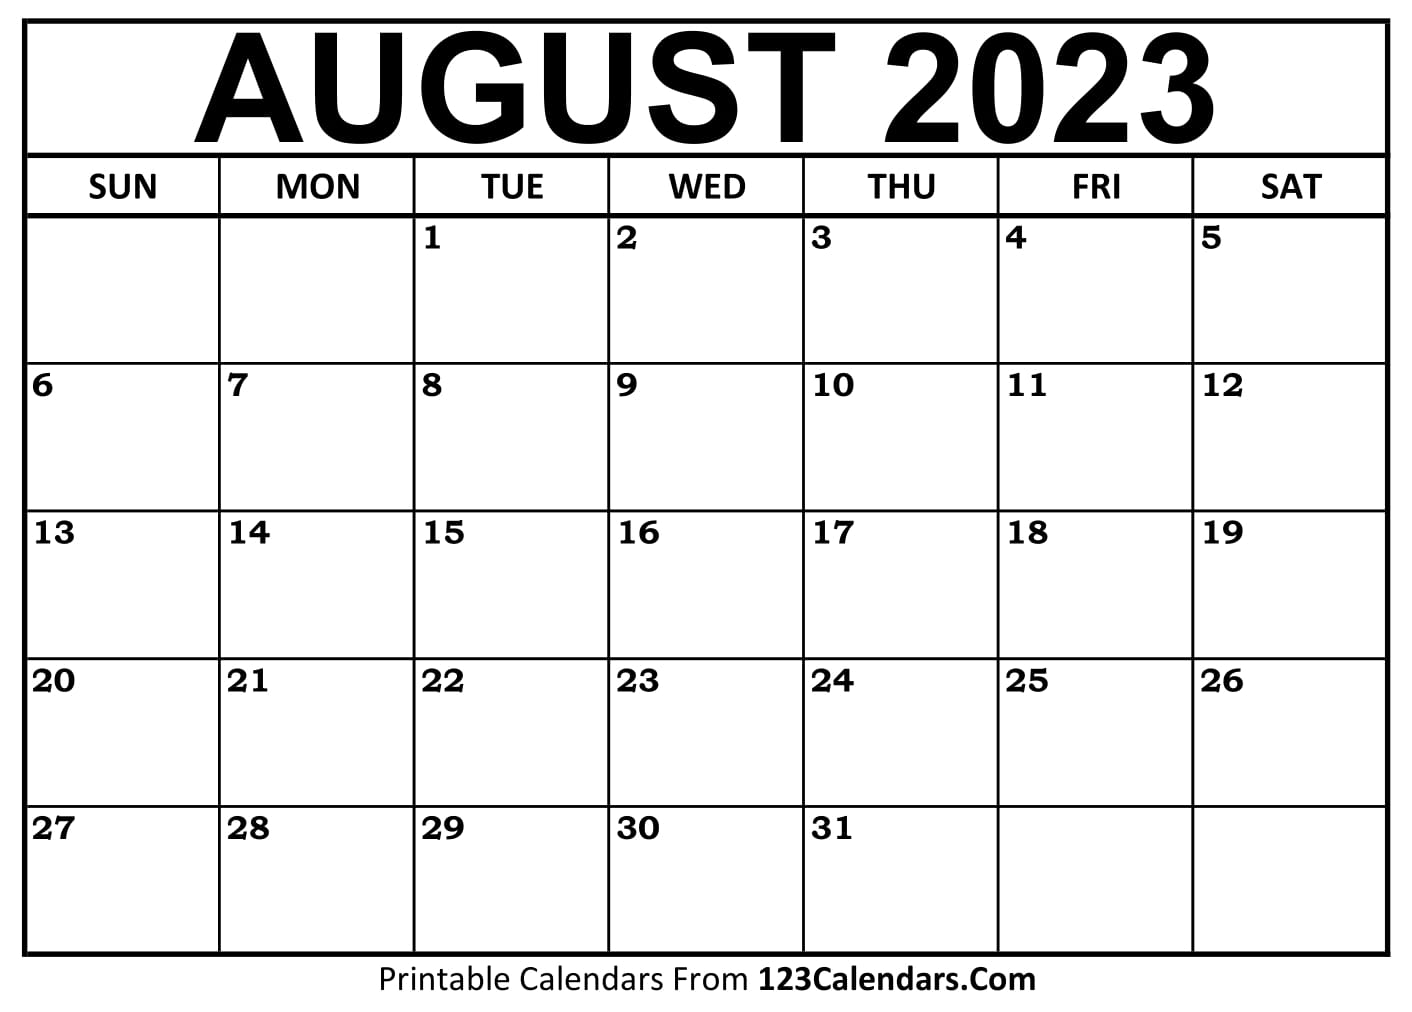 august-2023-calendar-image-get-latest-map-update